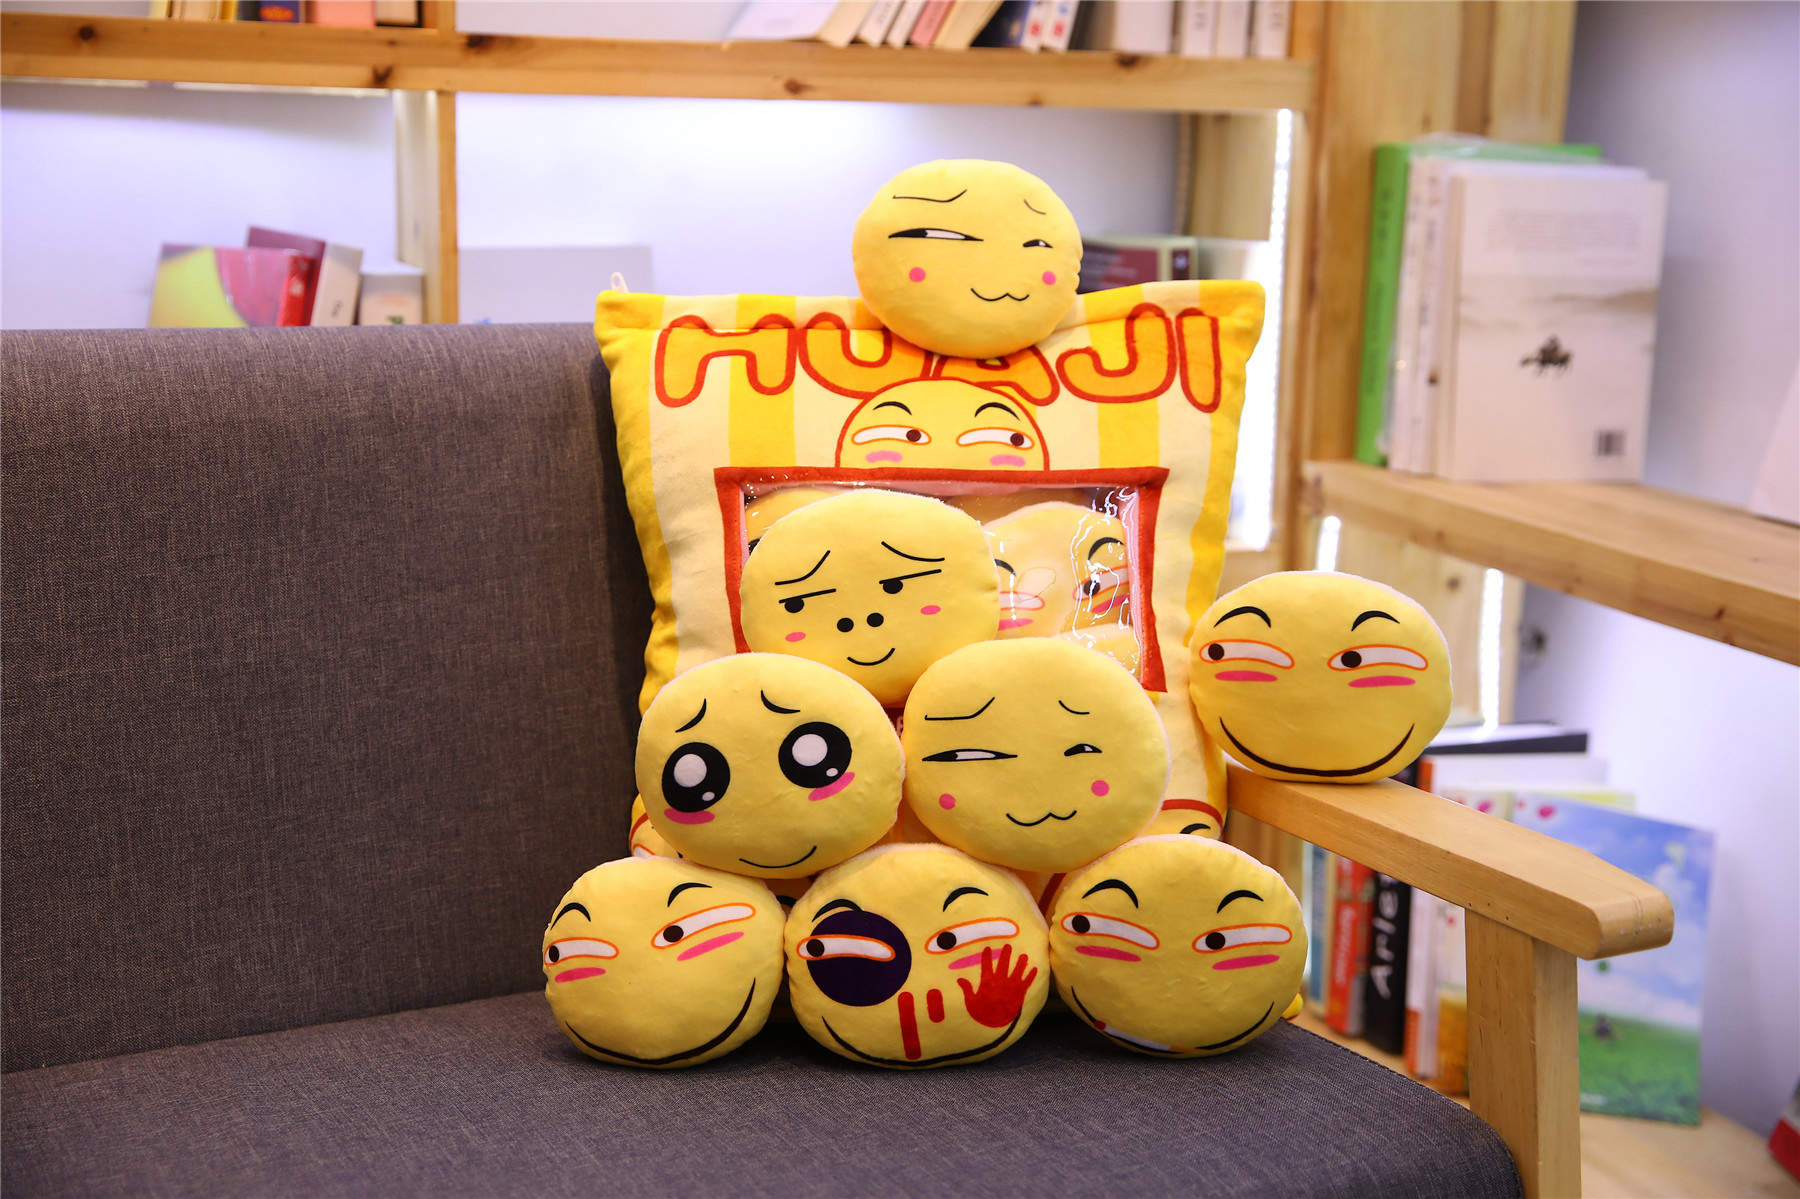 Plush Kawaii Anime Soft Stuffed Pillows